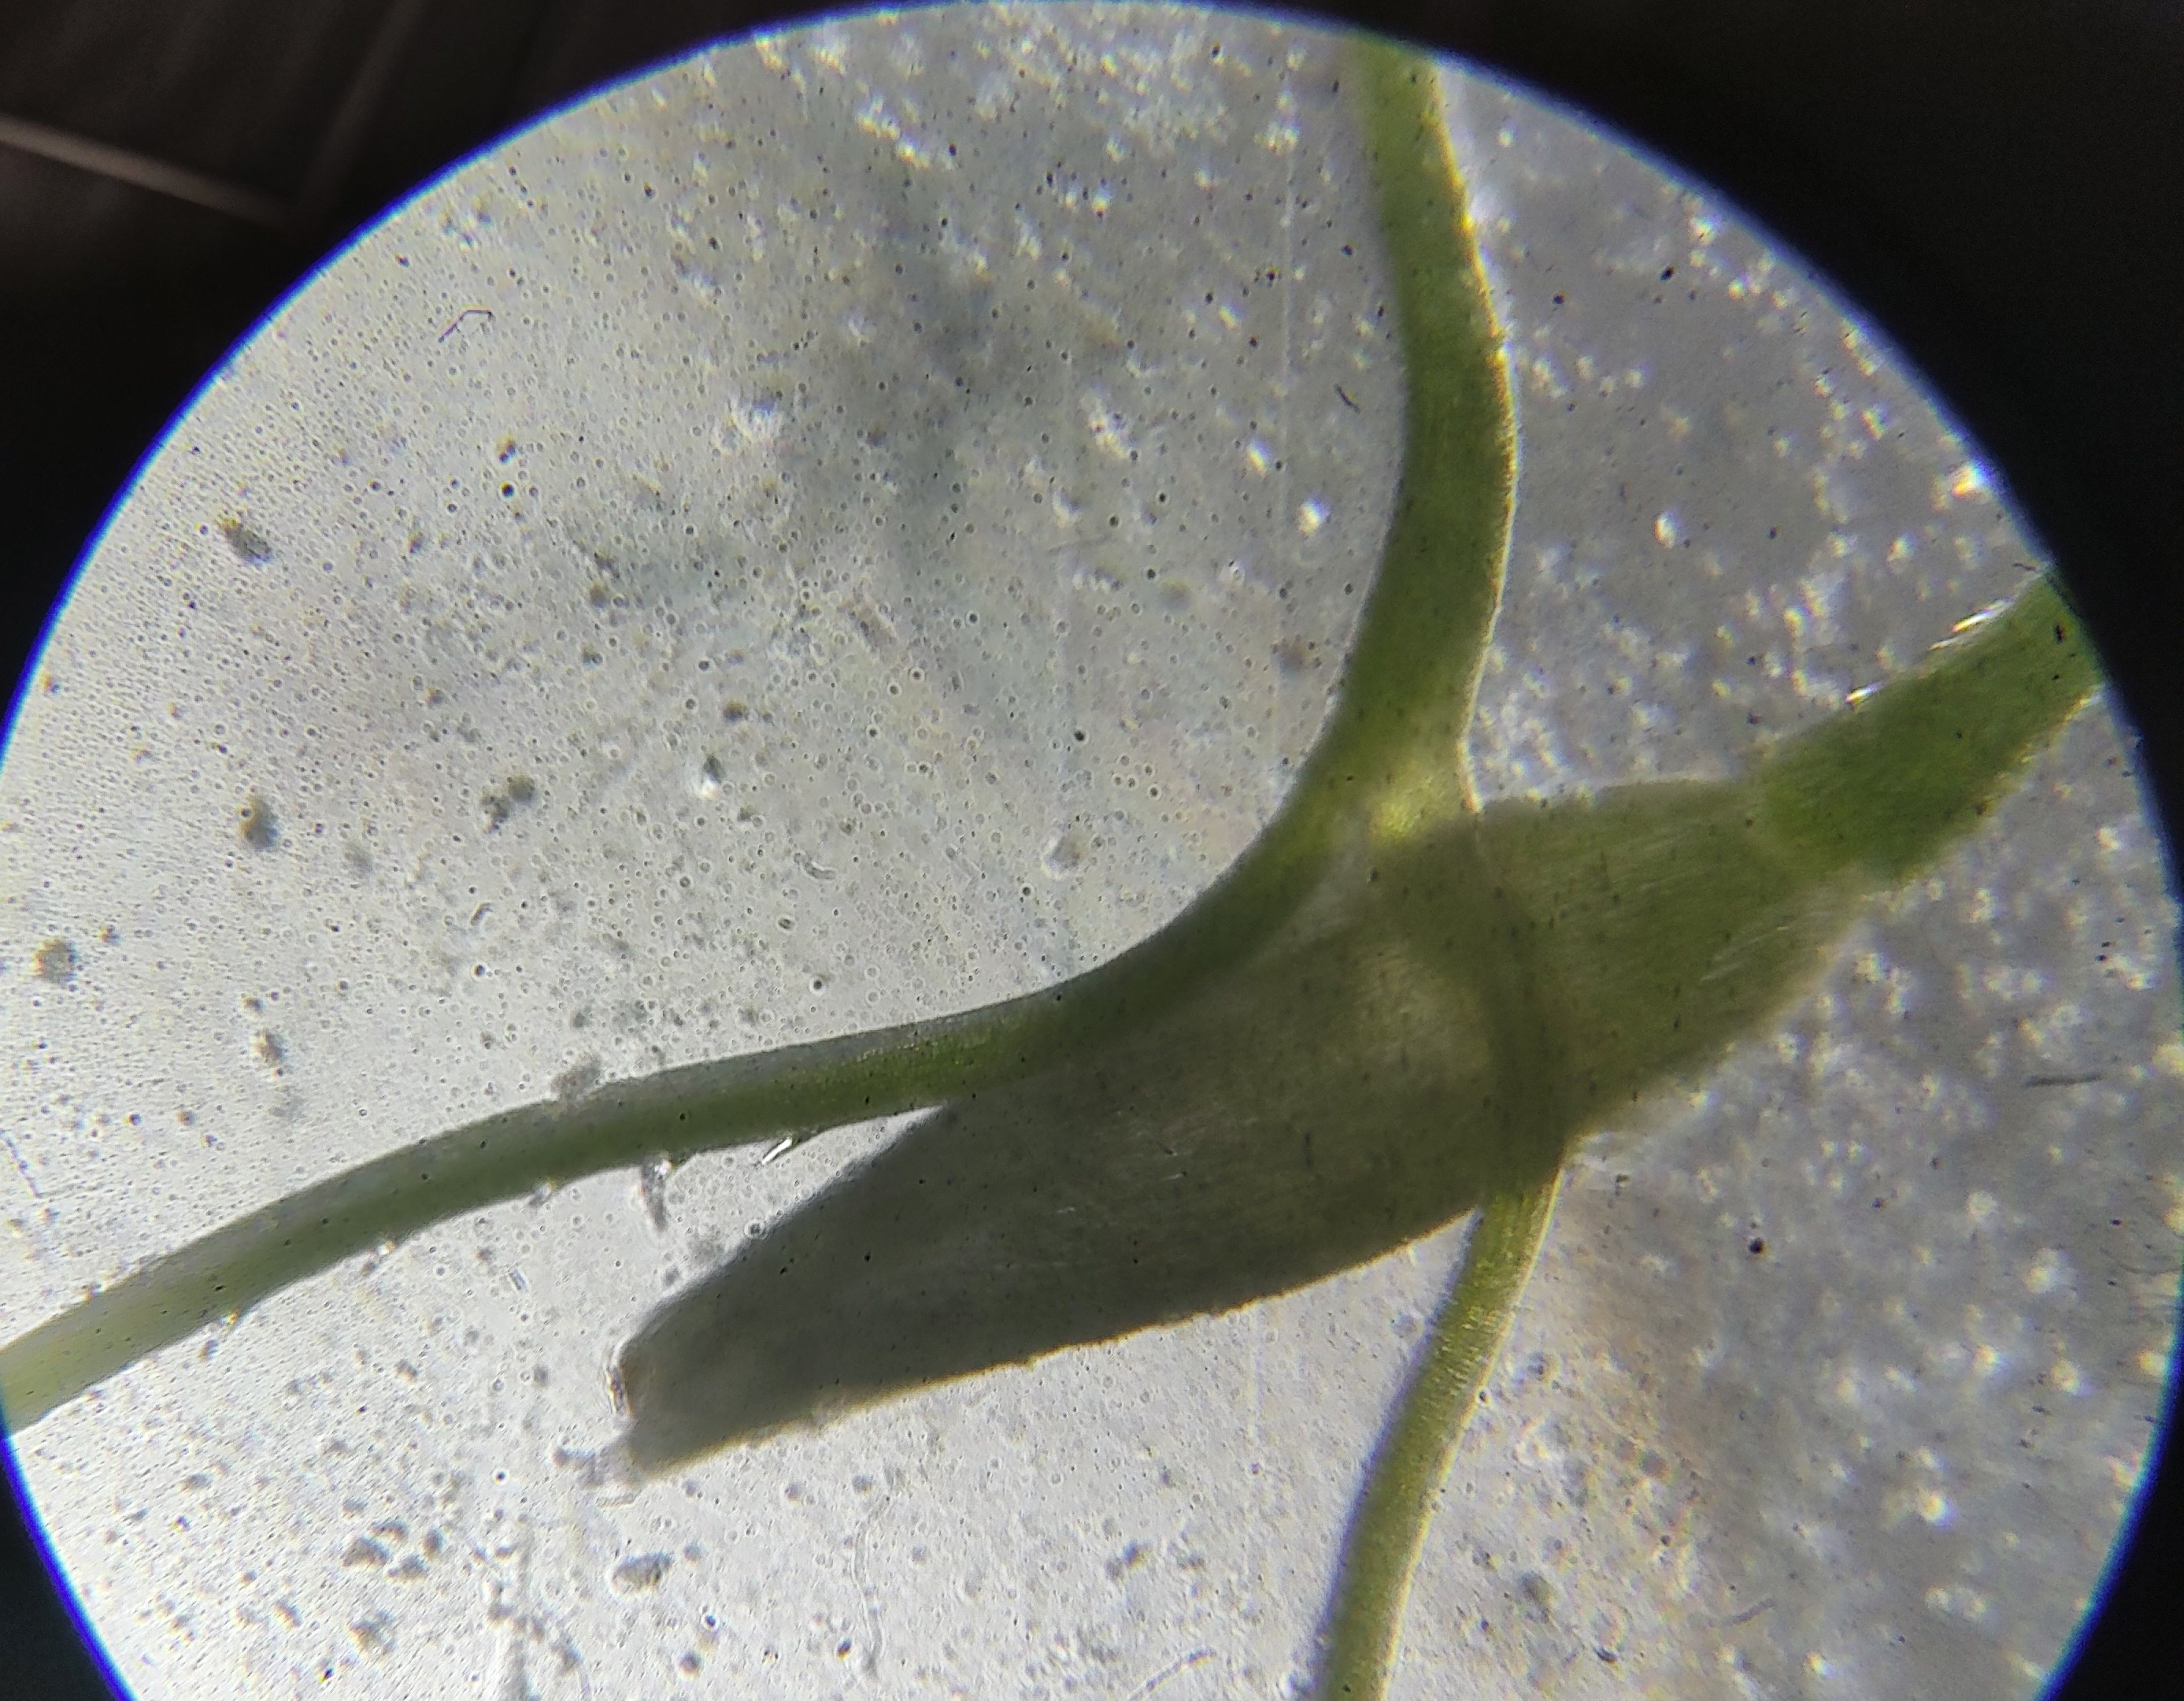 Grass Floret seen through a compound microscope.